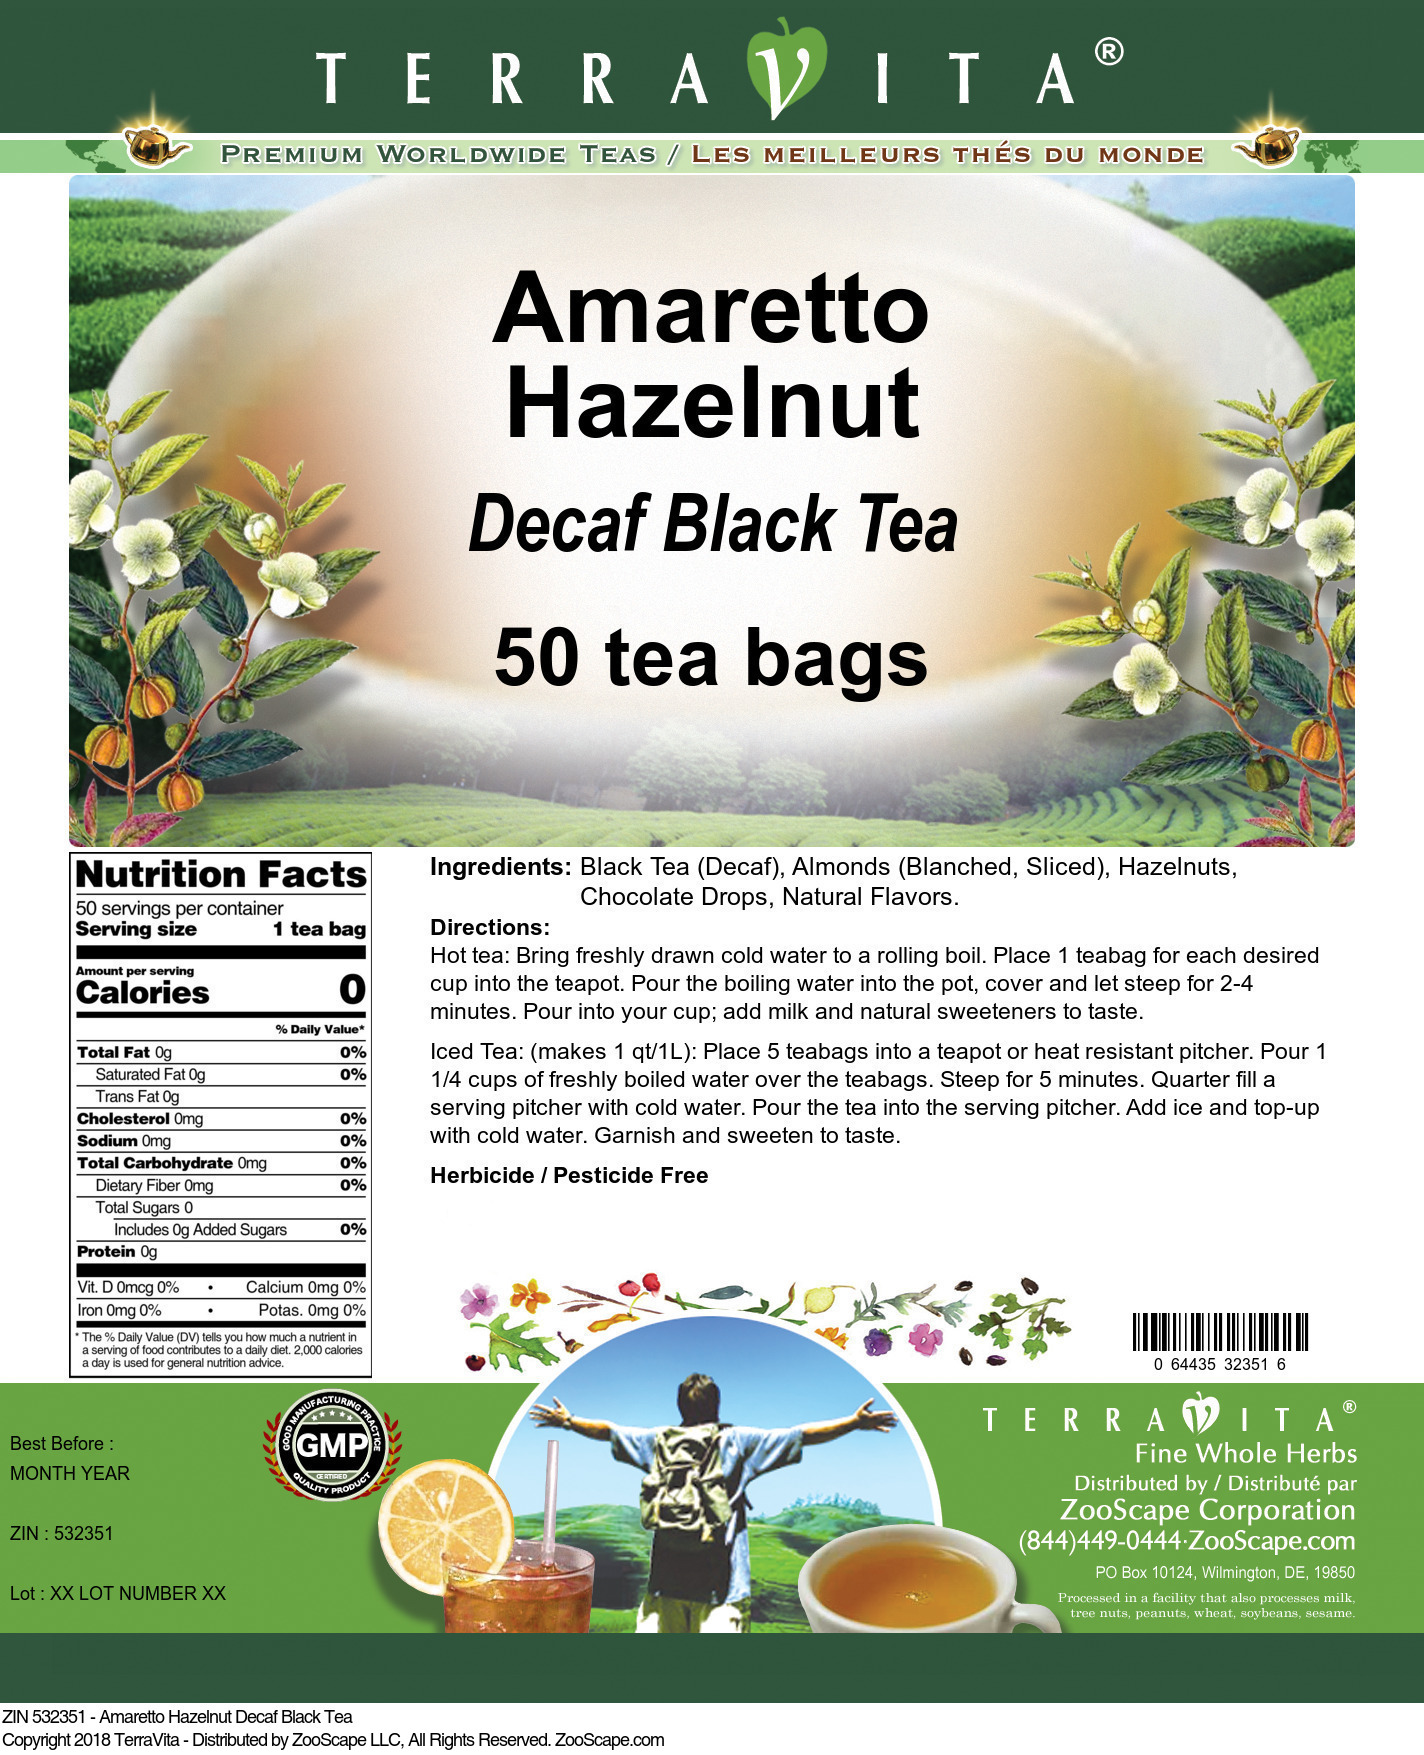 Amaretto Hazelnut Decaf Black Tea - Label